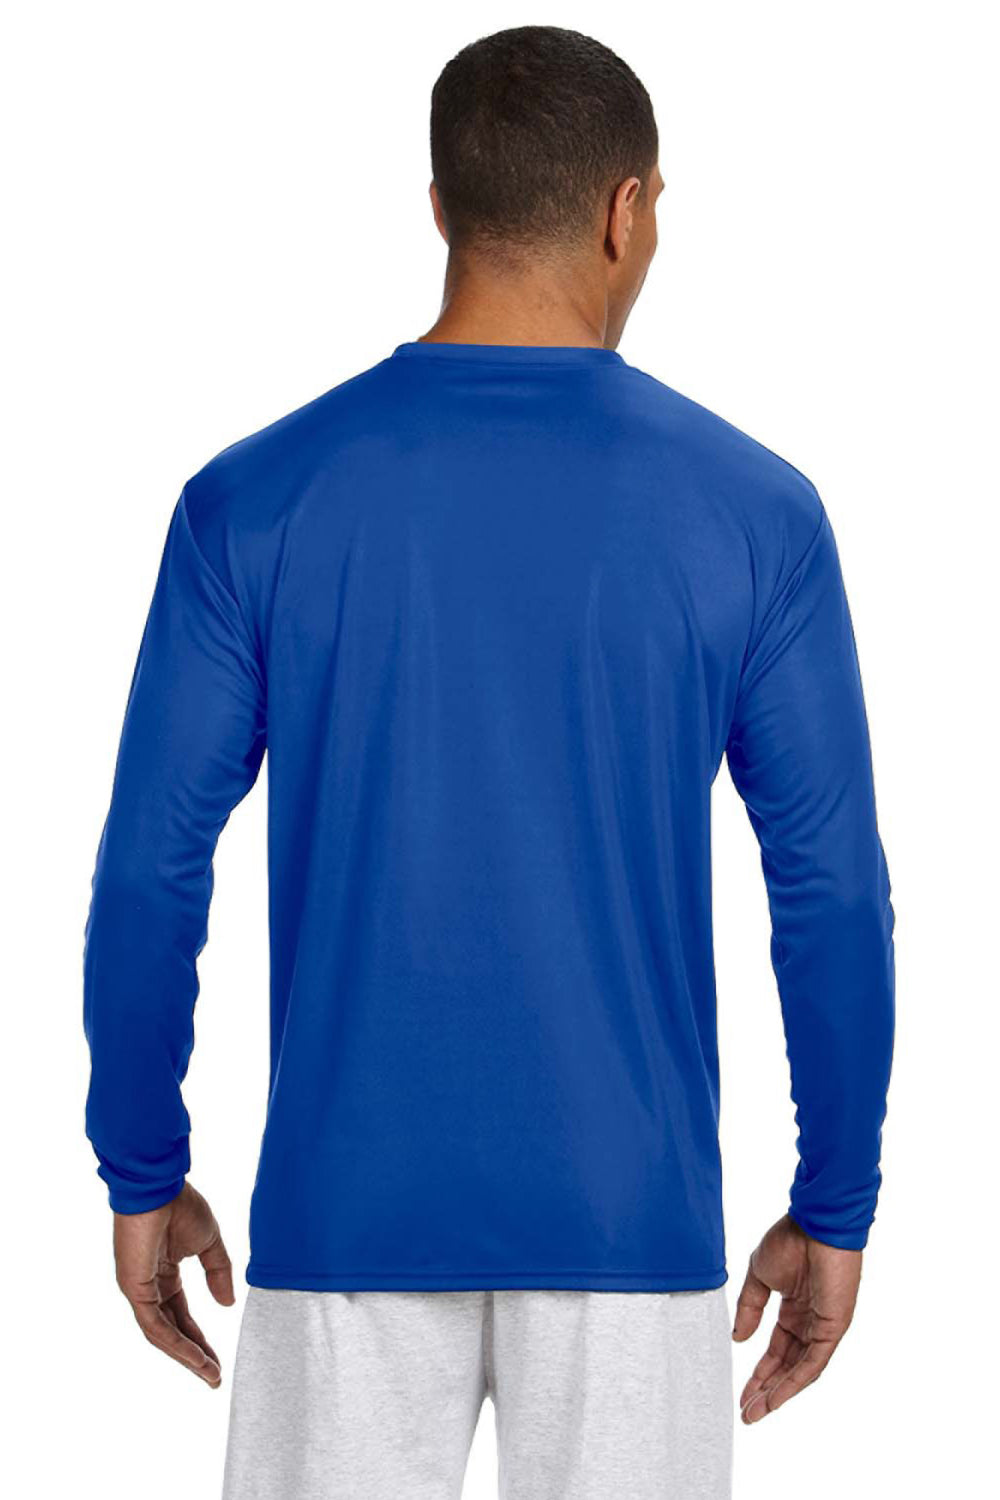 A4 N3165 Mens Performance Moisture Wicking Long Sleeve Crewneck T-Shirt Royal Blue Model Back